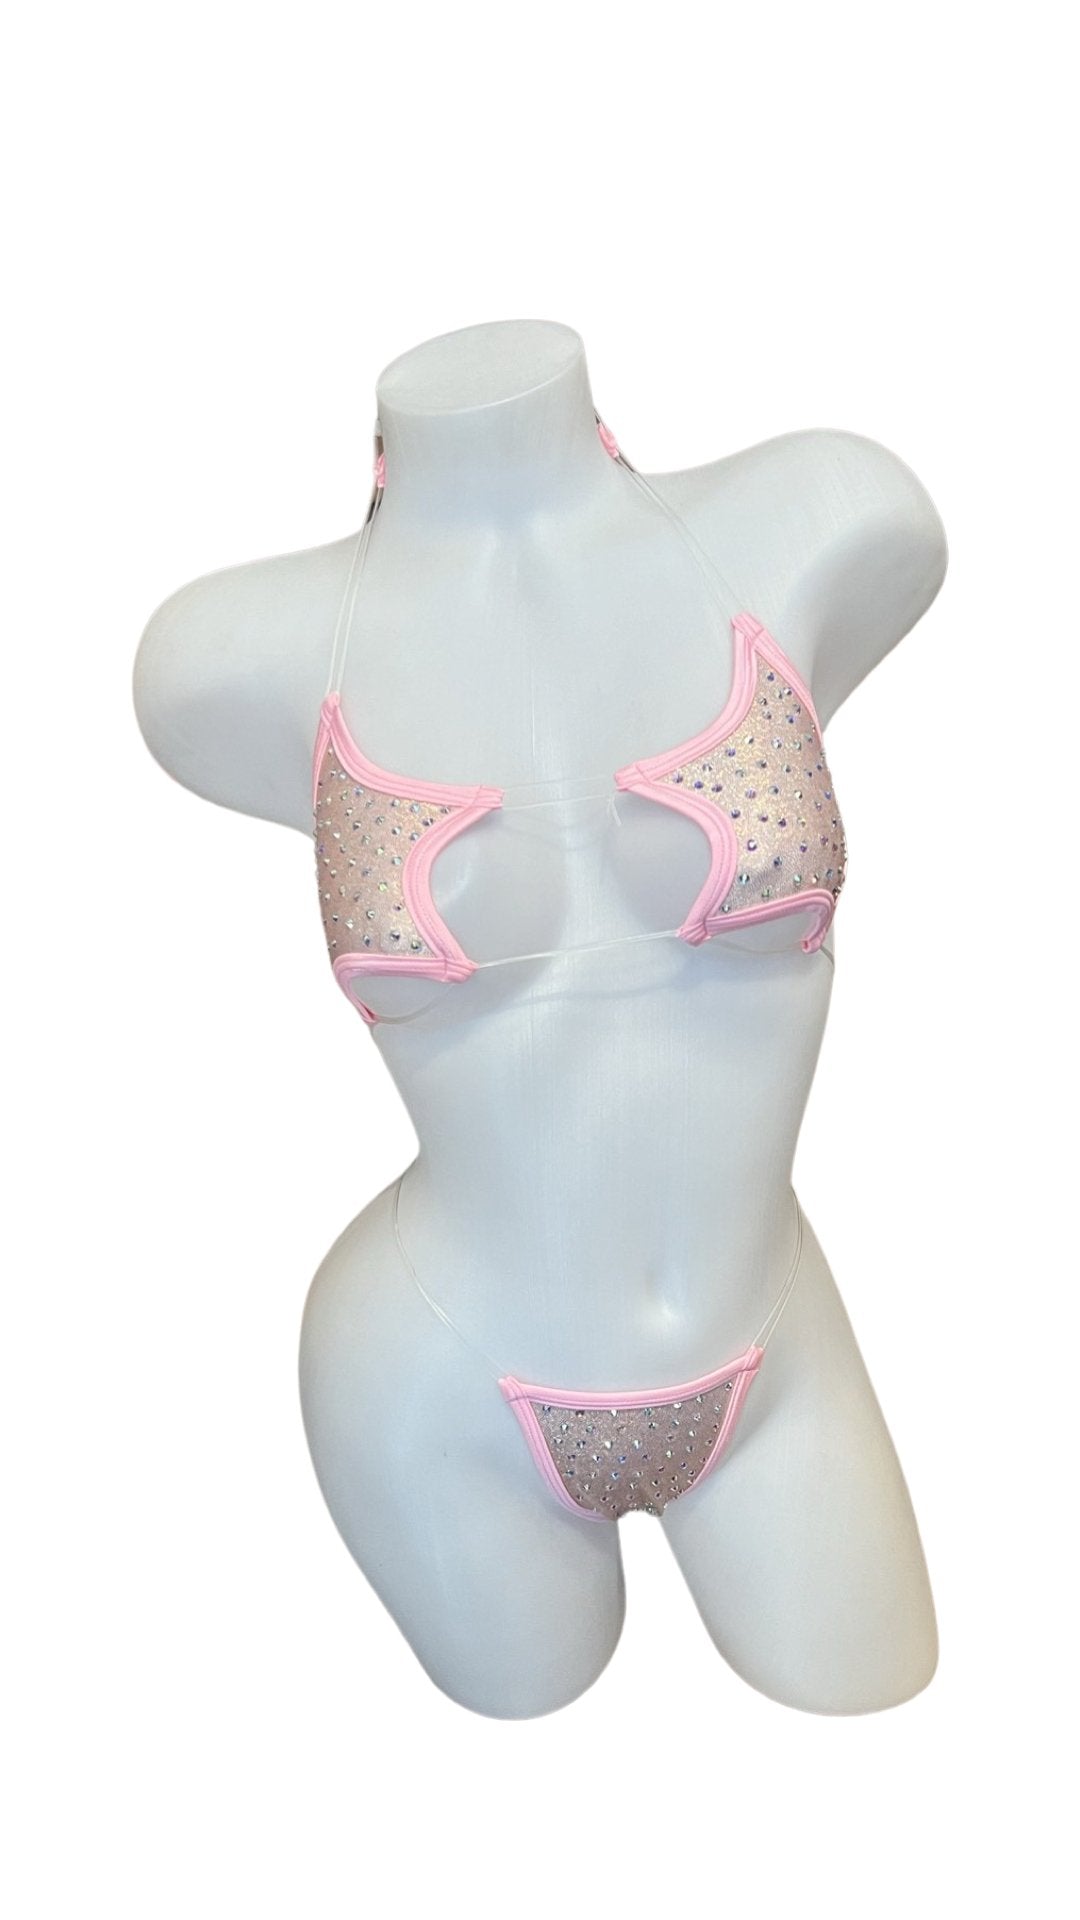 Rhinestone Star Bikini - Baby Pink Sparkle - Model Express VancouverBikini